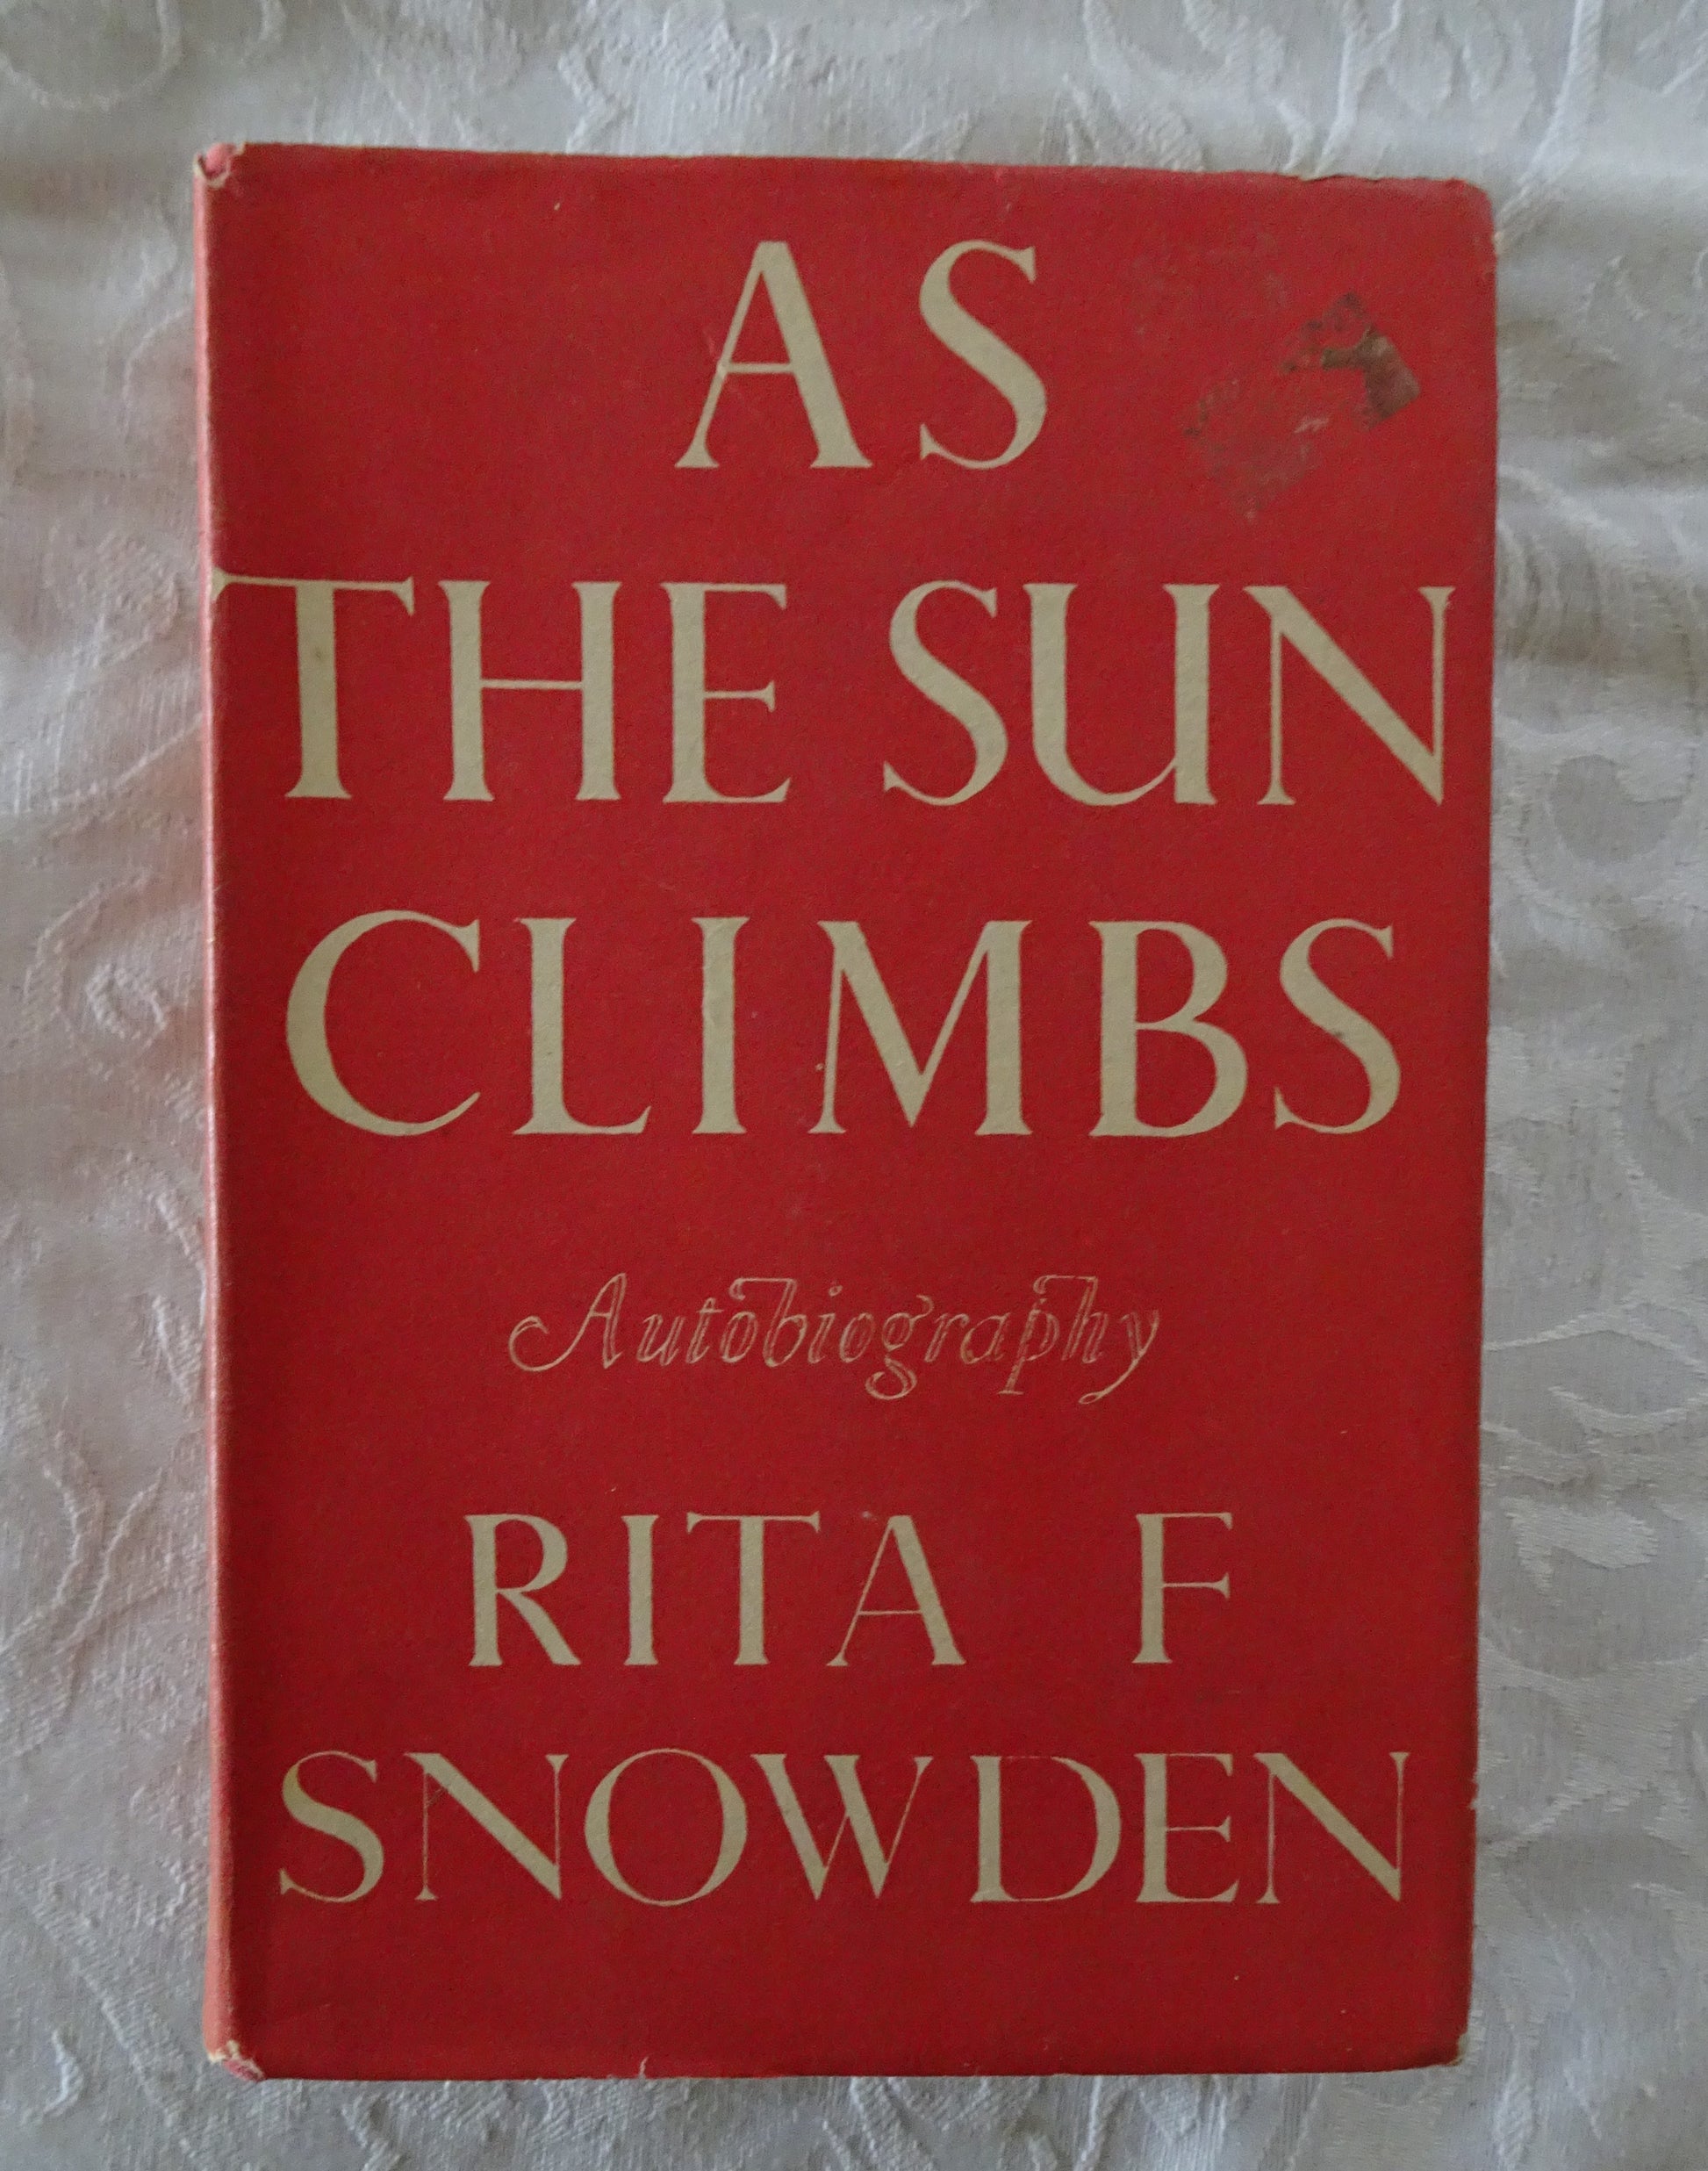 As The Sun Climbs  by Rita F Snowden